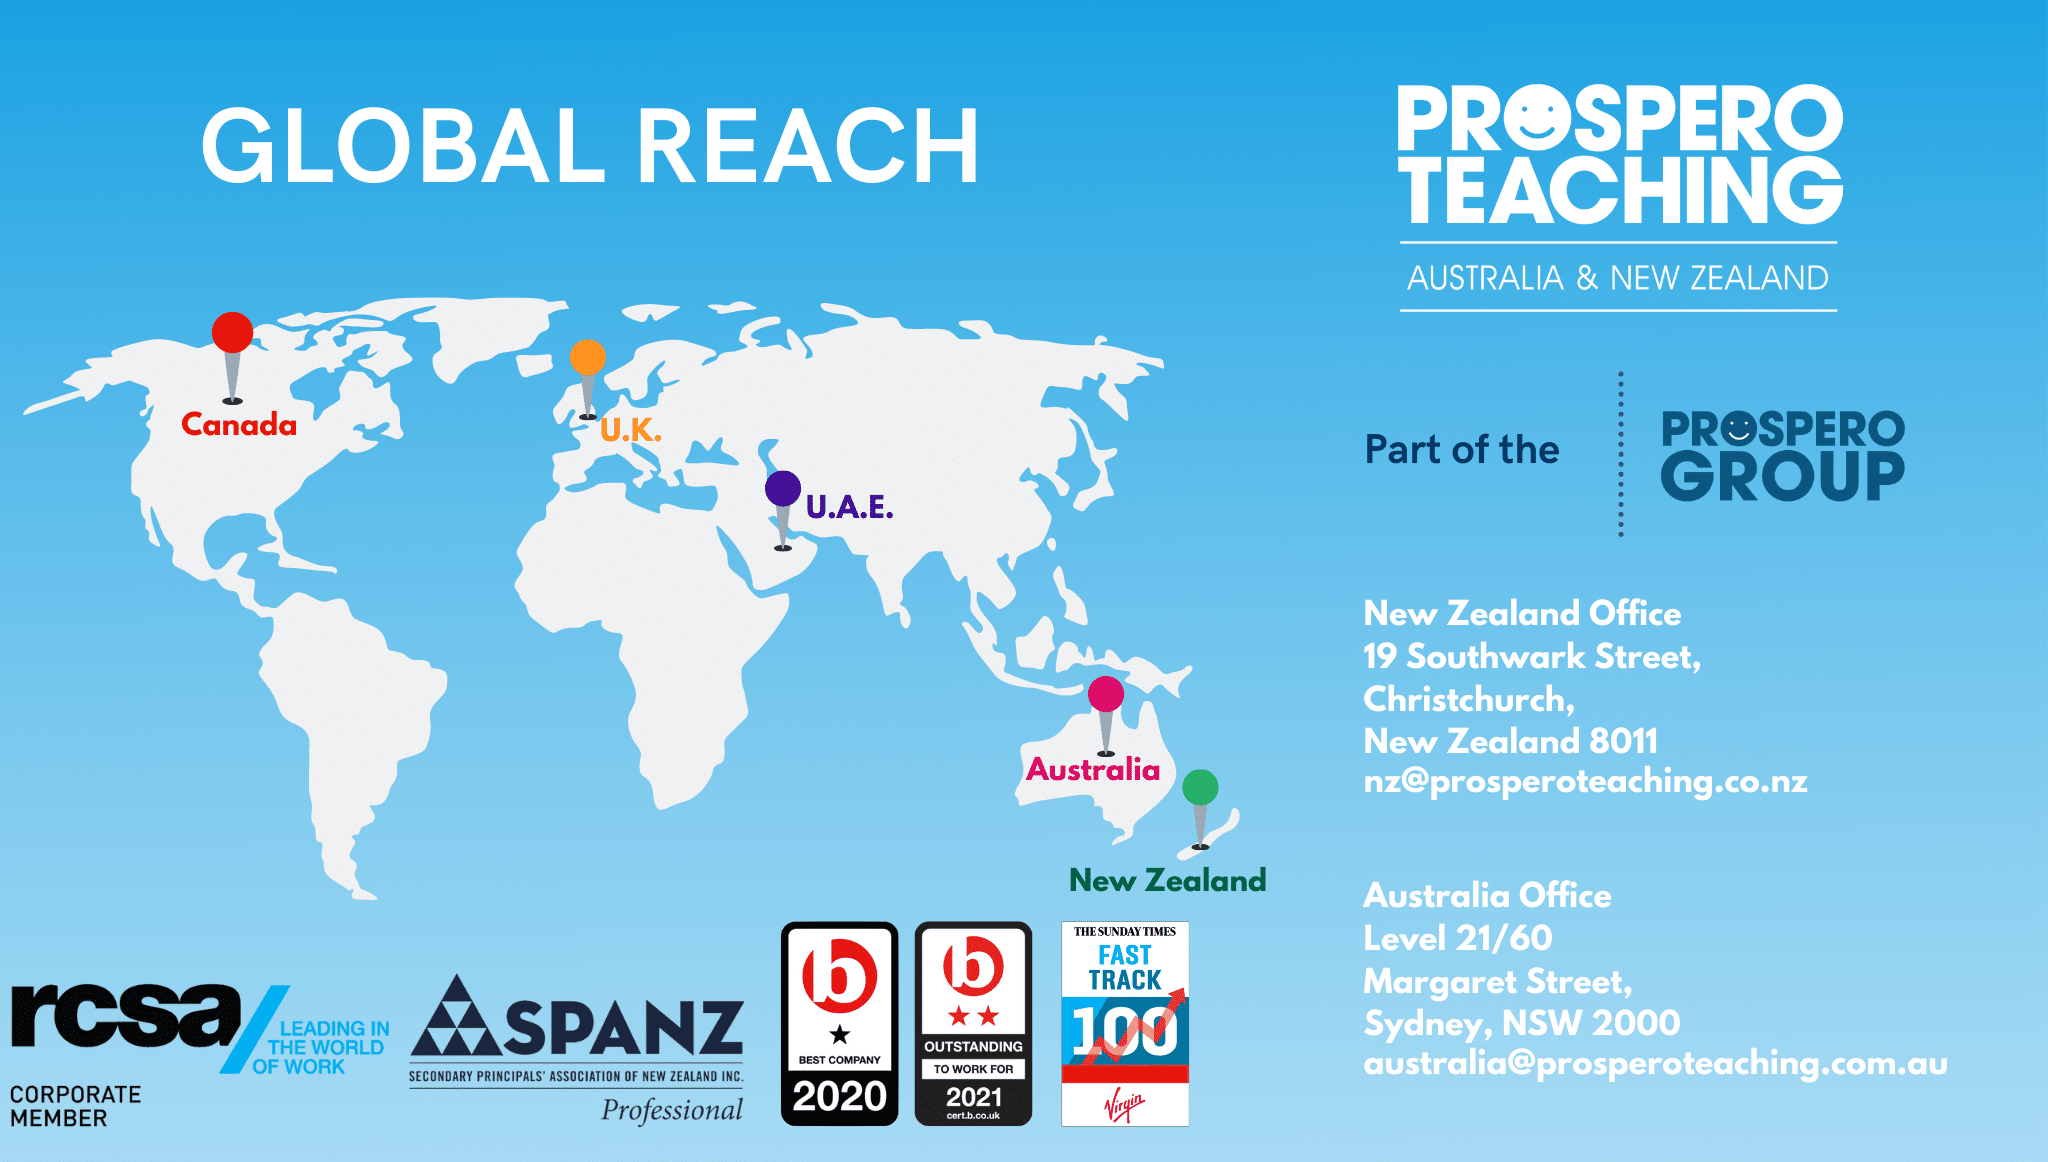 Global reach of Prospero